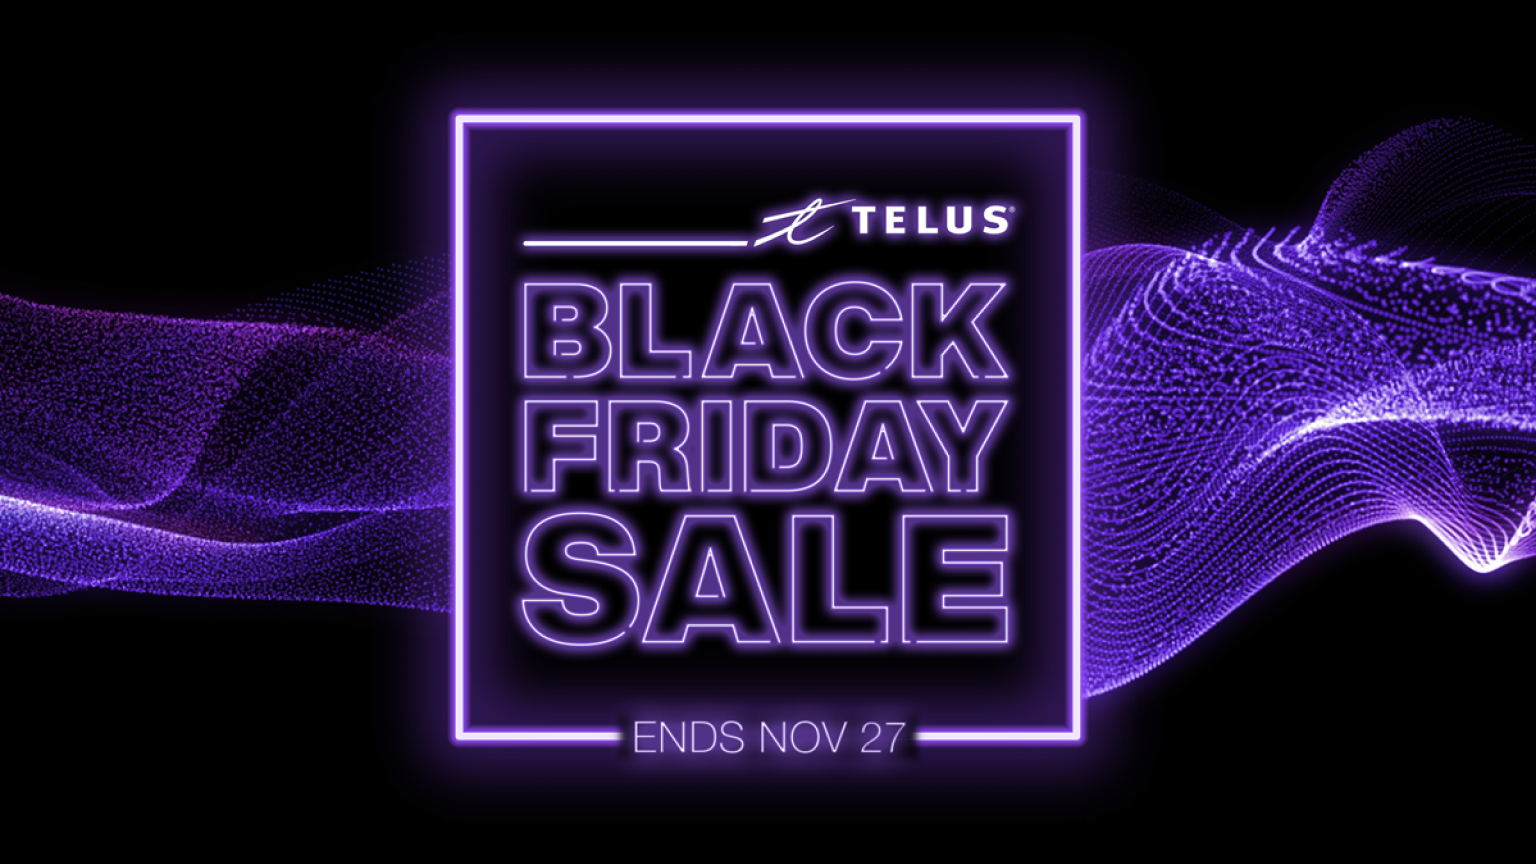 Black Friday sale for 75 TELUS